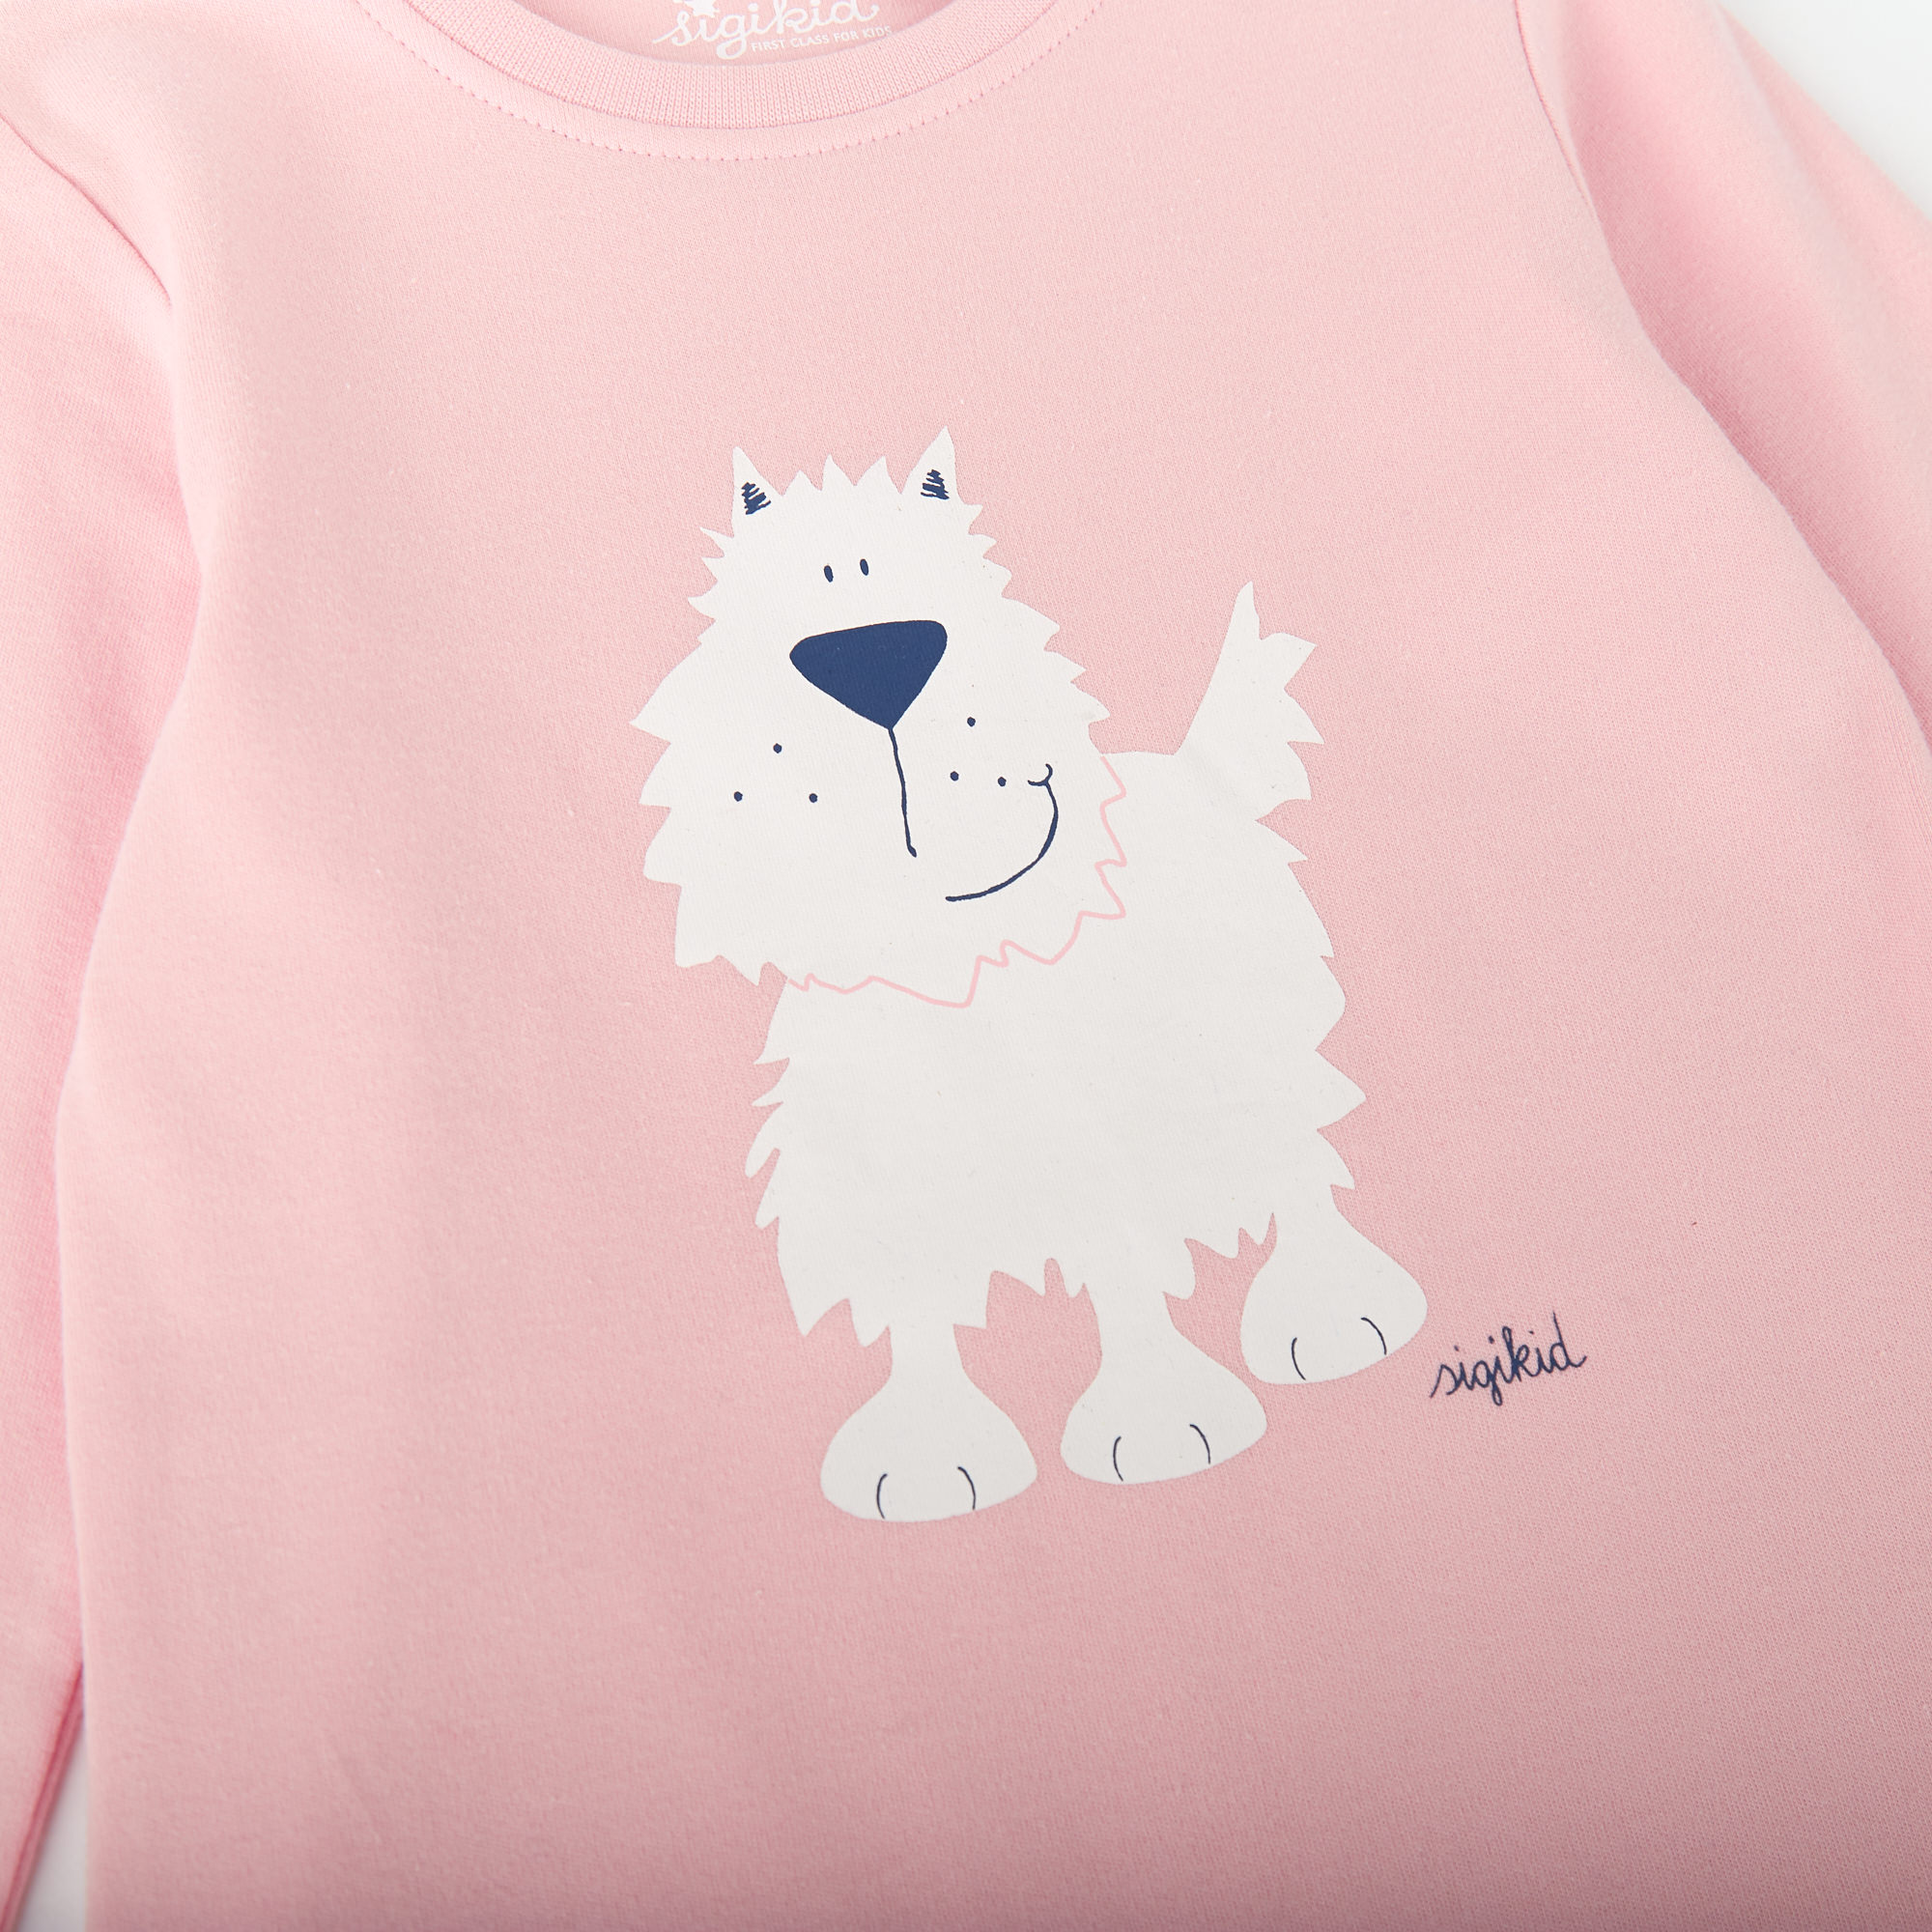 Long-sleeved girls' pyjamas dog, pink/grey